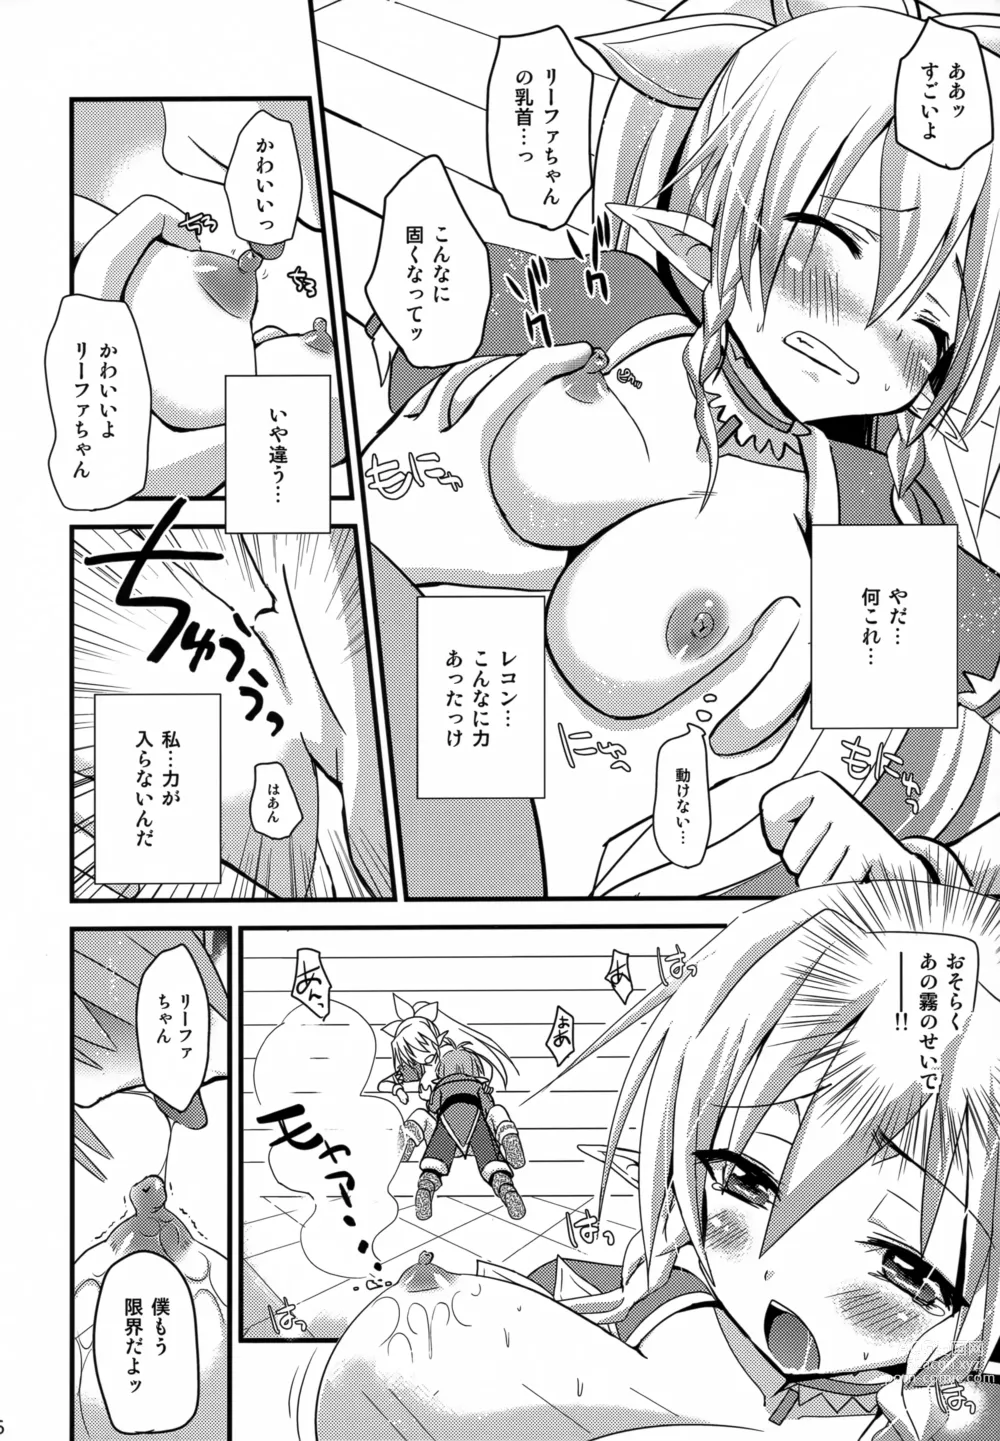 Page 5 of doujinshi Suguha Offline